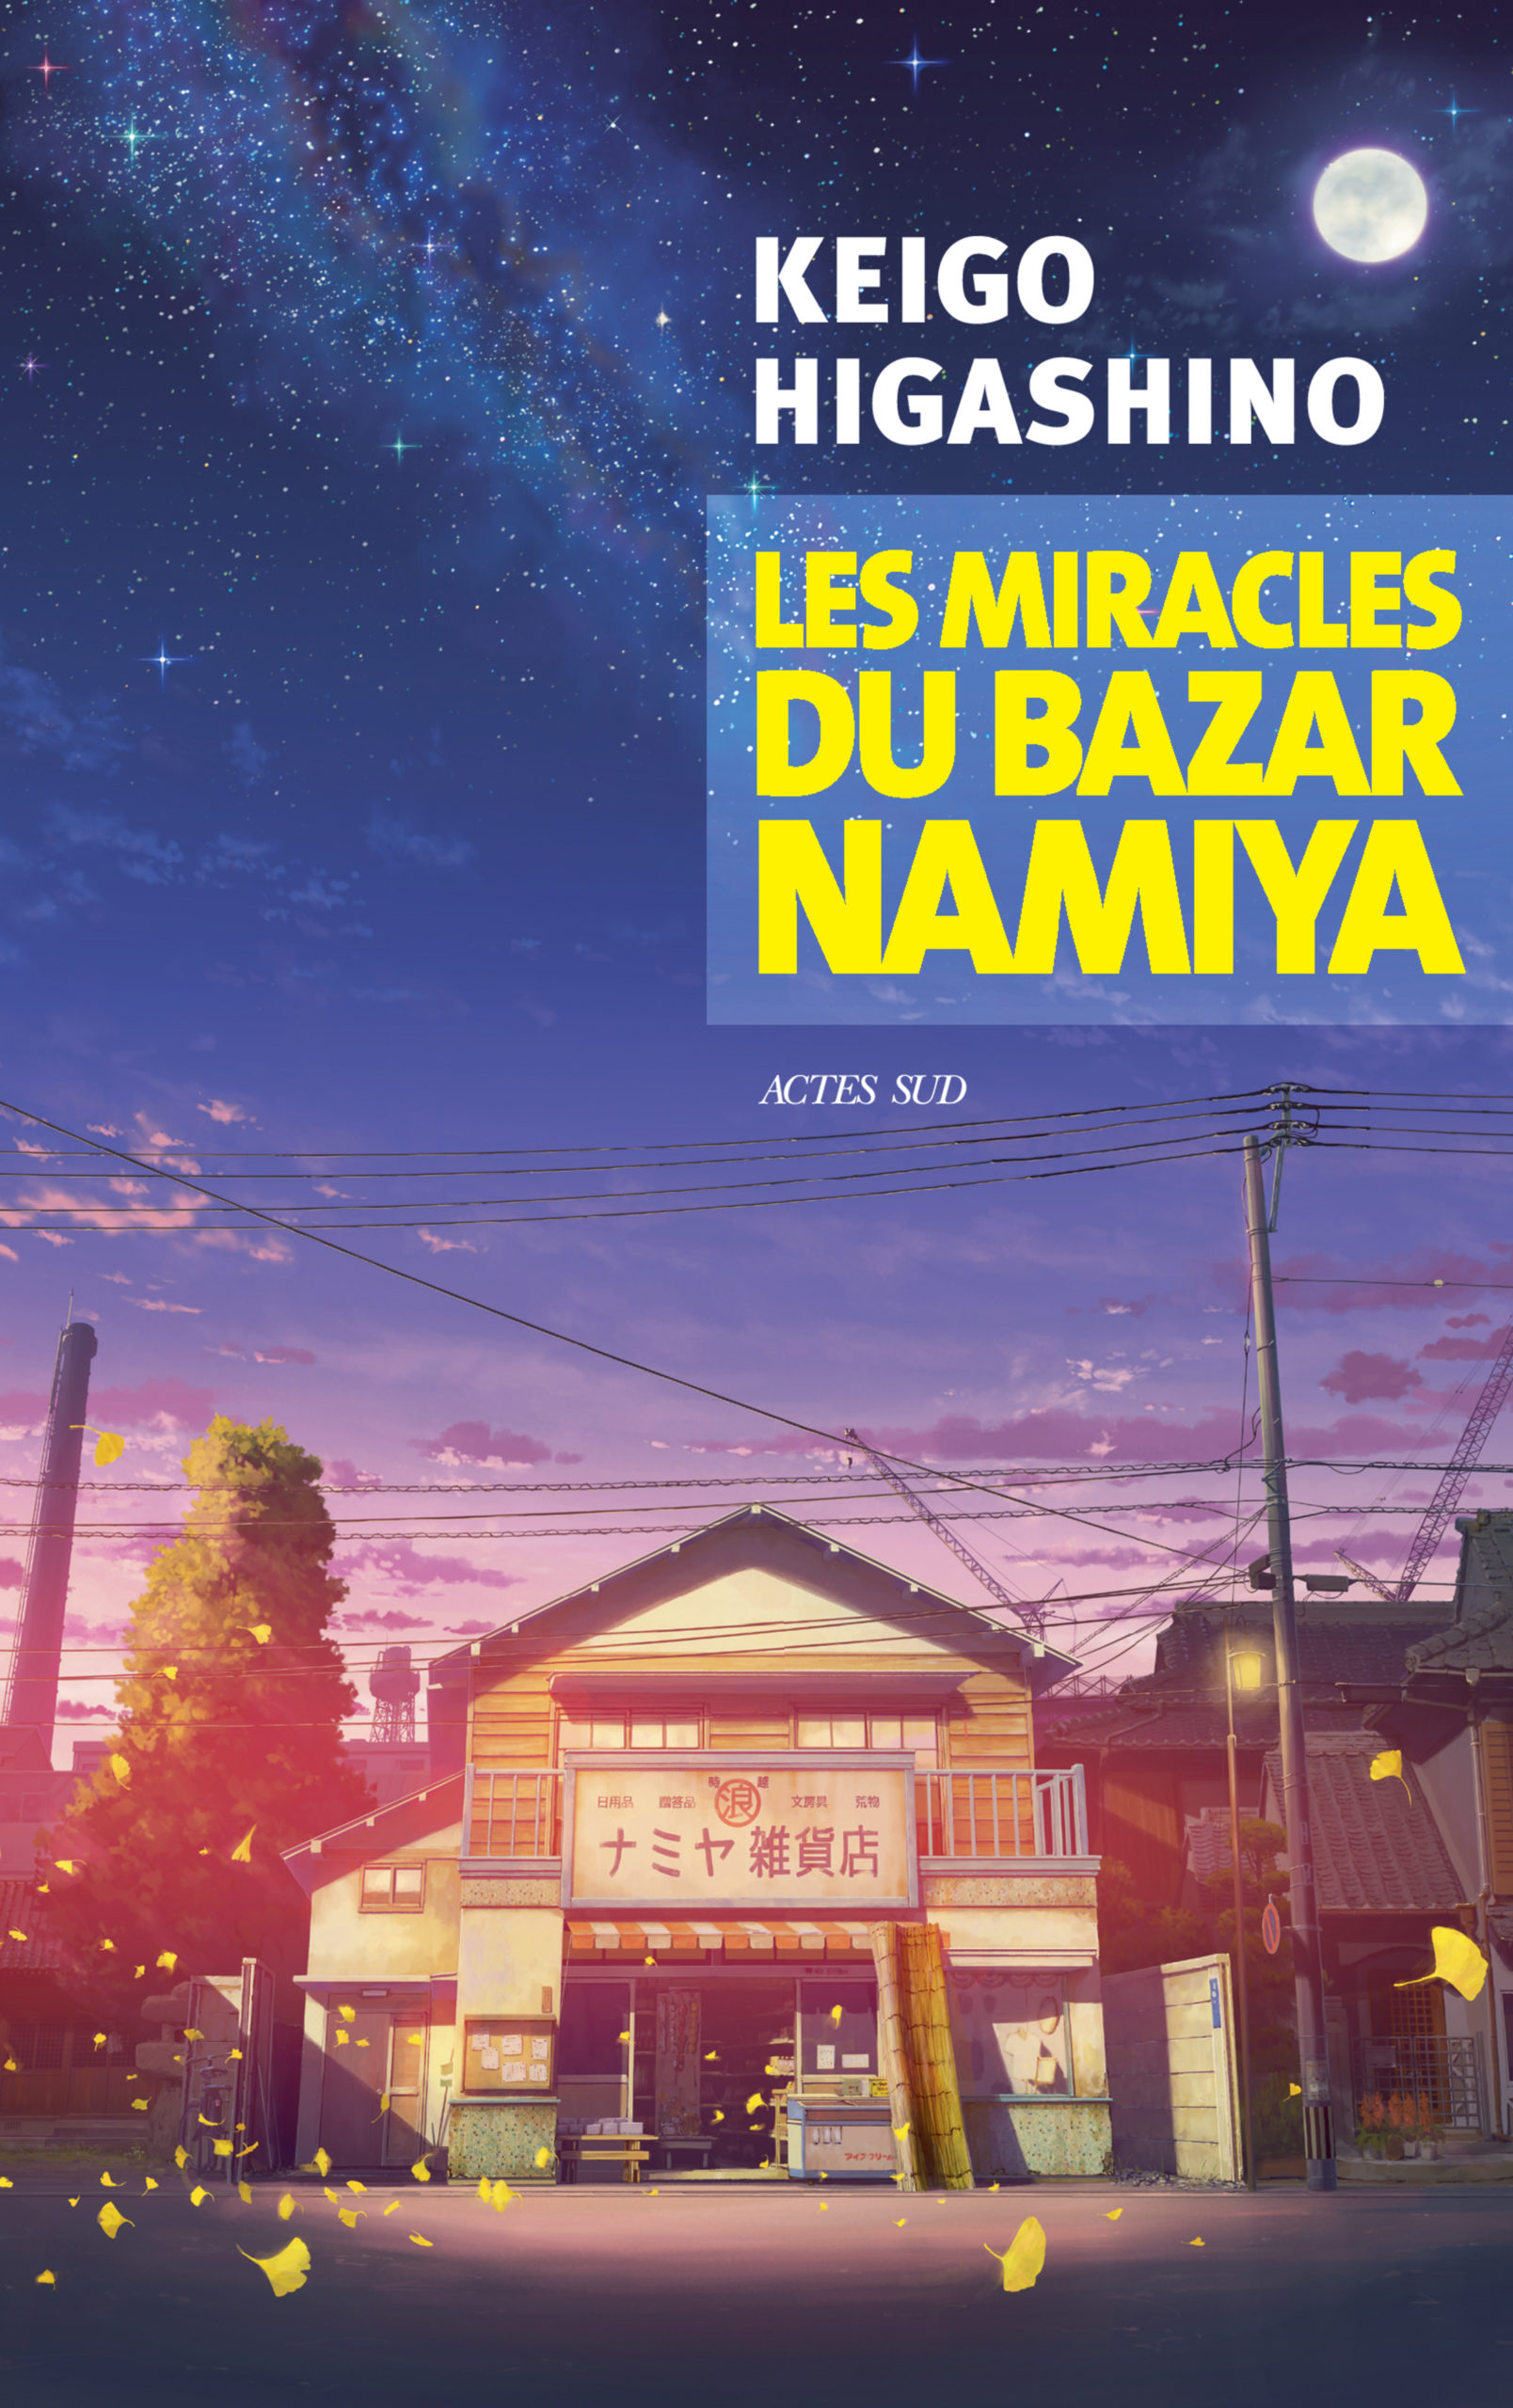 Les miracles du Bazar Namiya de Keigo Higashino paraît le 22 janvier.